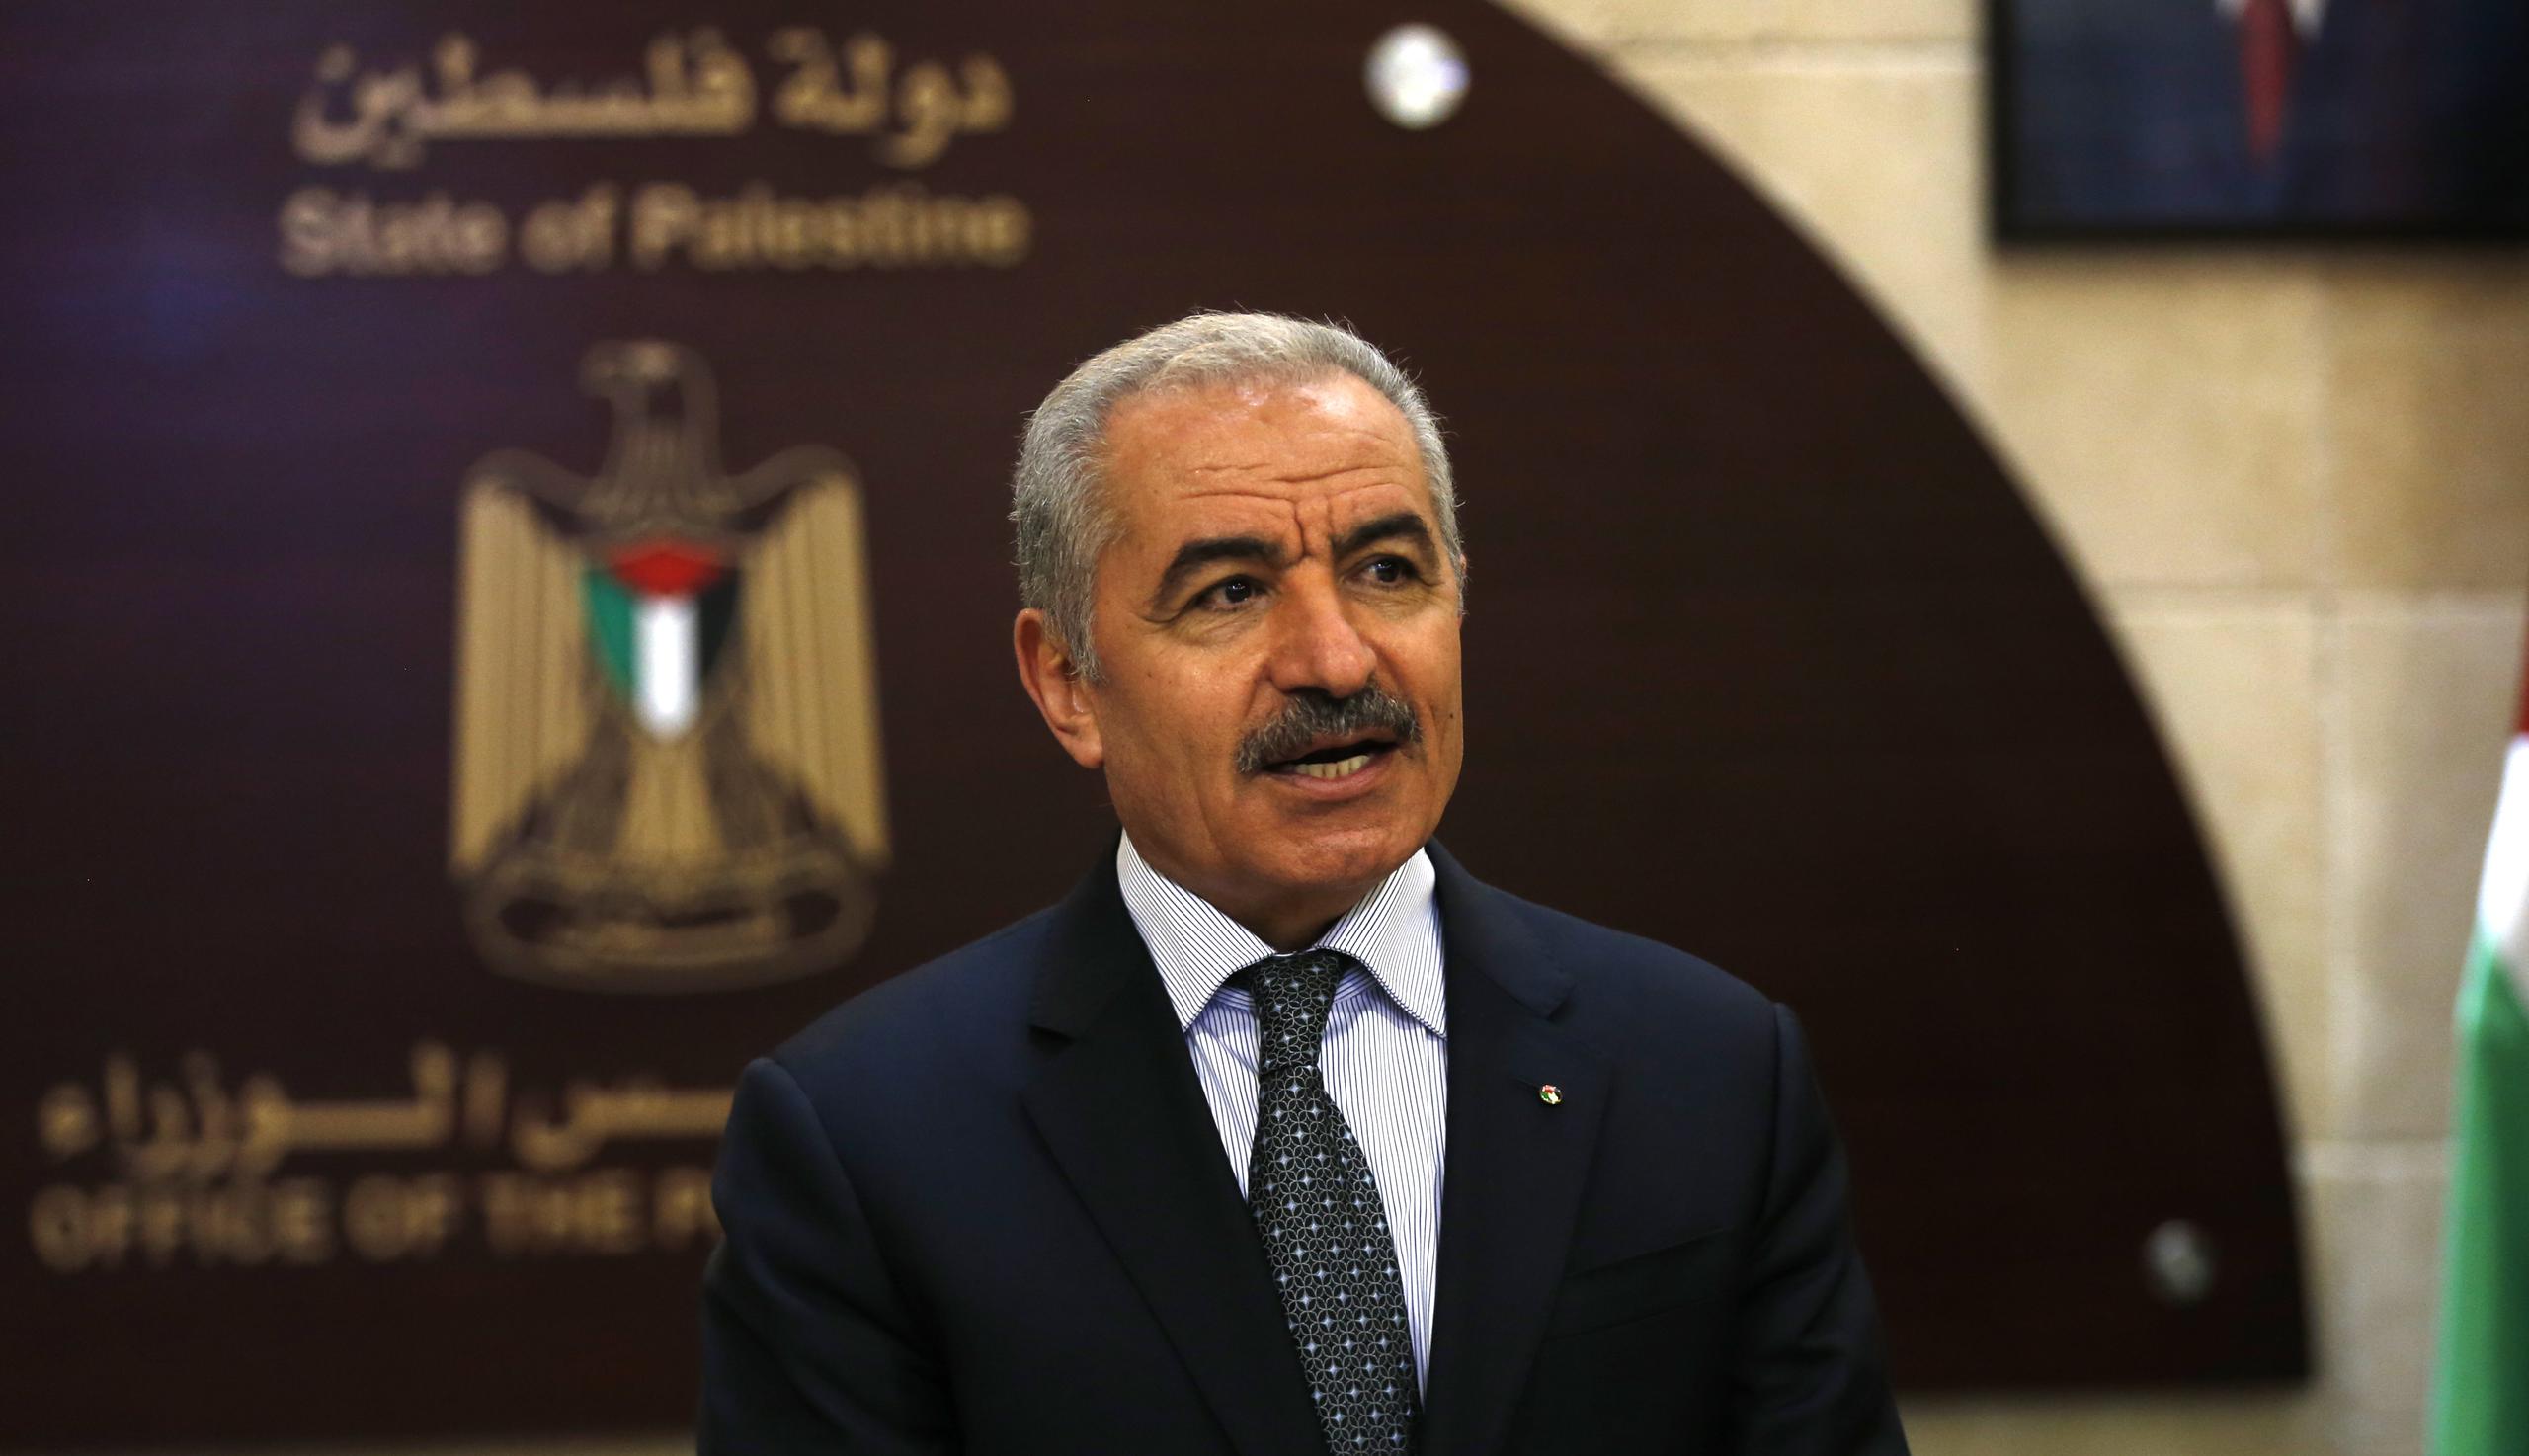 El primer ministro palestino, Mohamed Shtayeh. EFE/EPA/ALAA BADARNEH / Archivo
